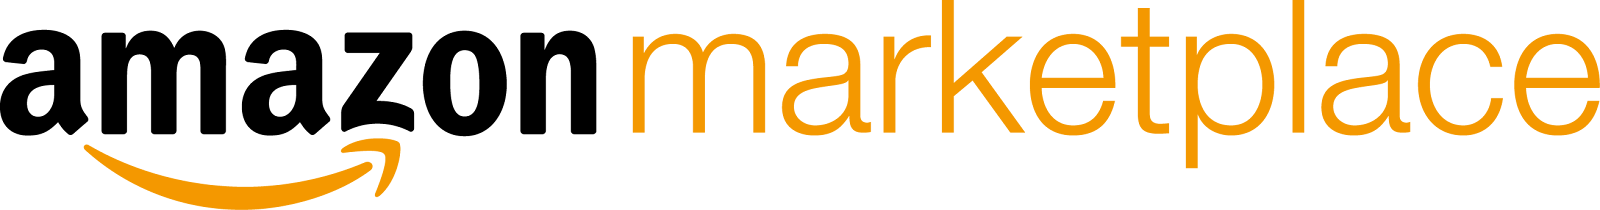 Amazon Marketplace Logo | Brandonaut